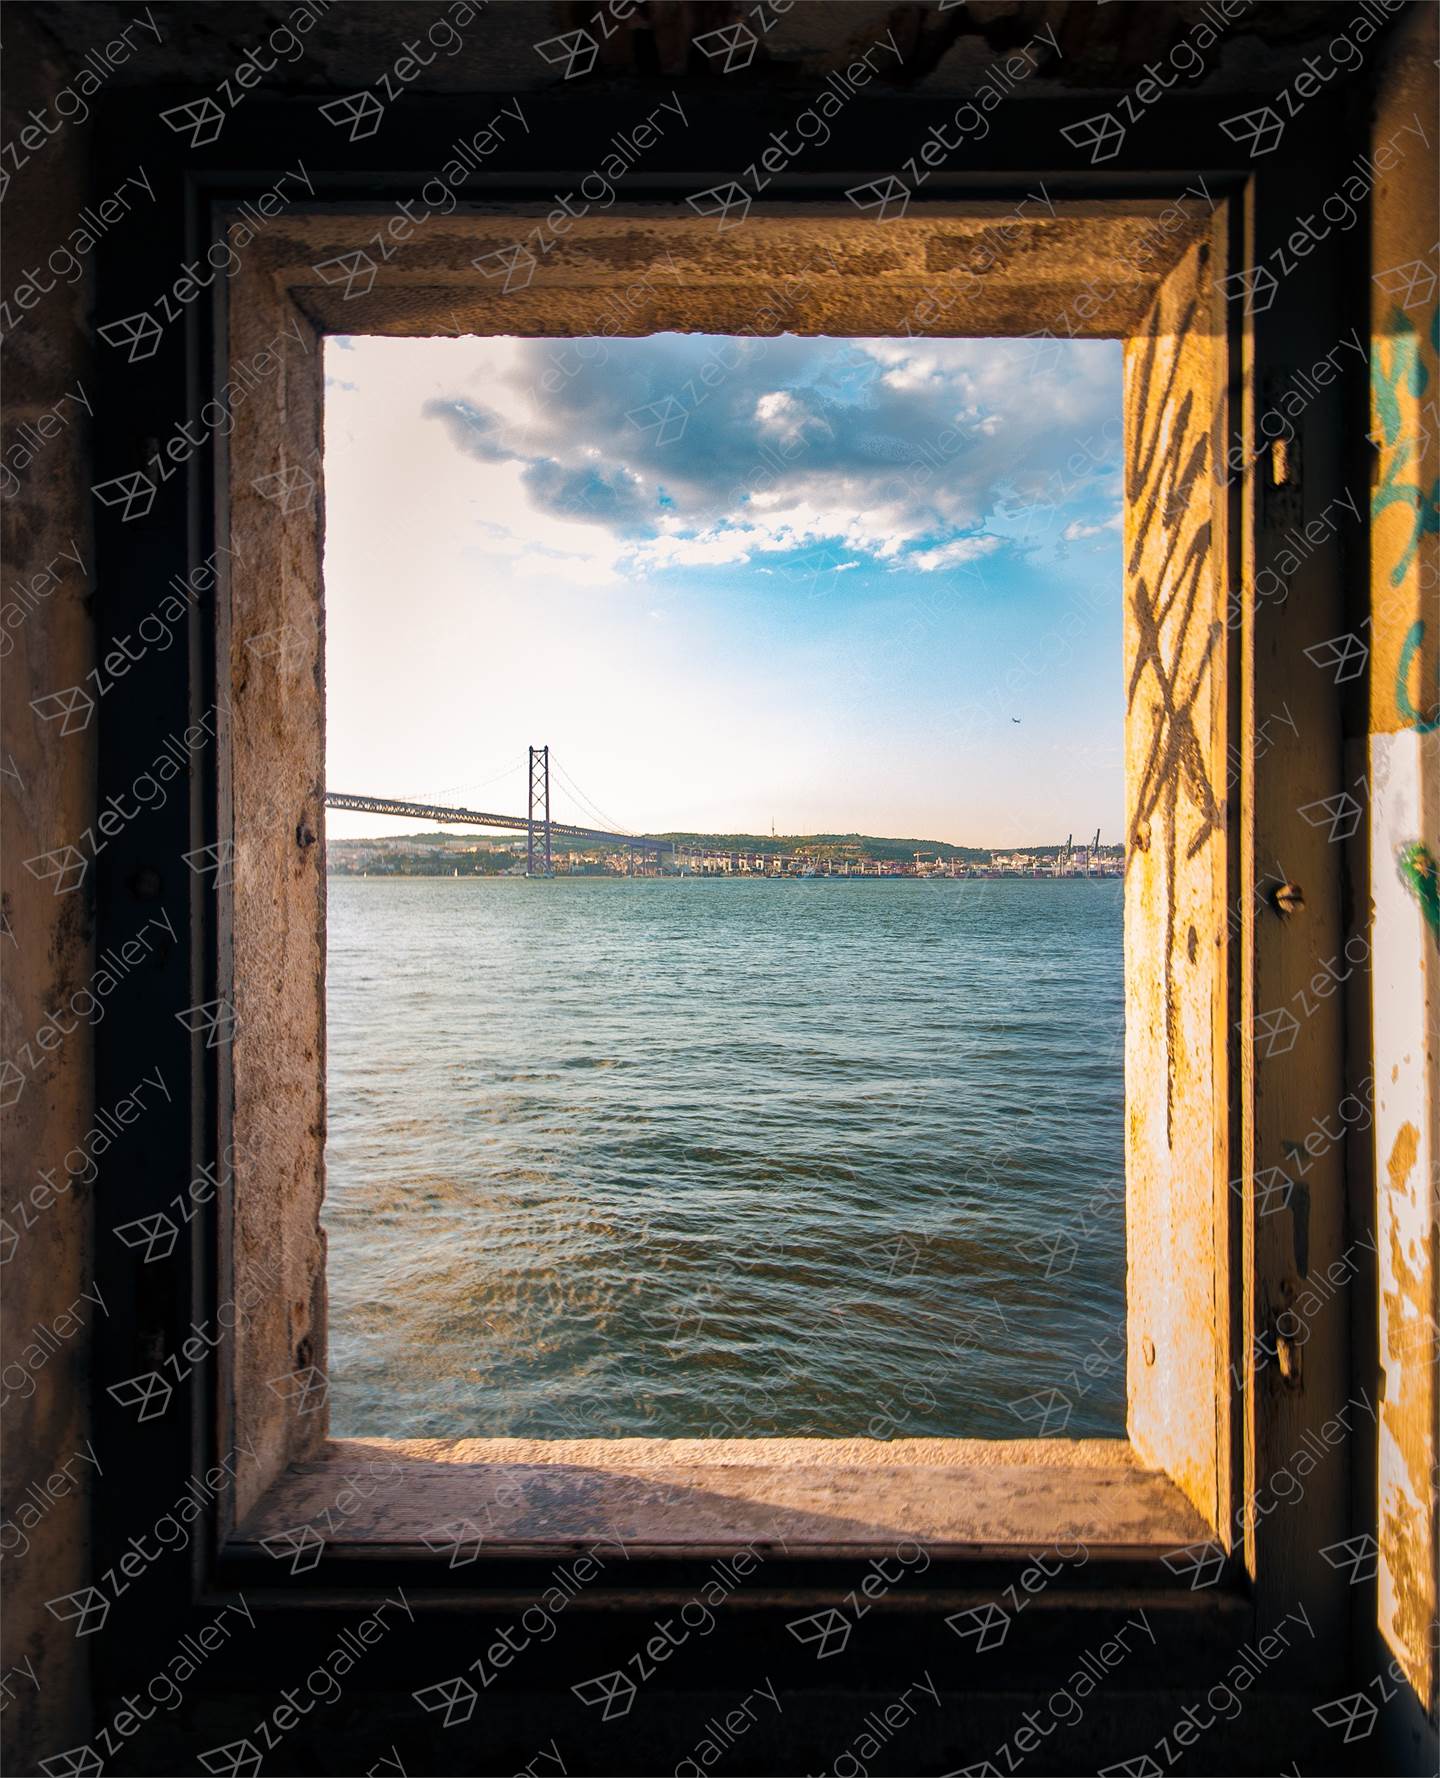 Framed Window, original Still Life Digital Photography by André Freire-Rocha